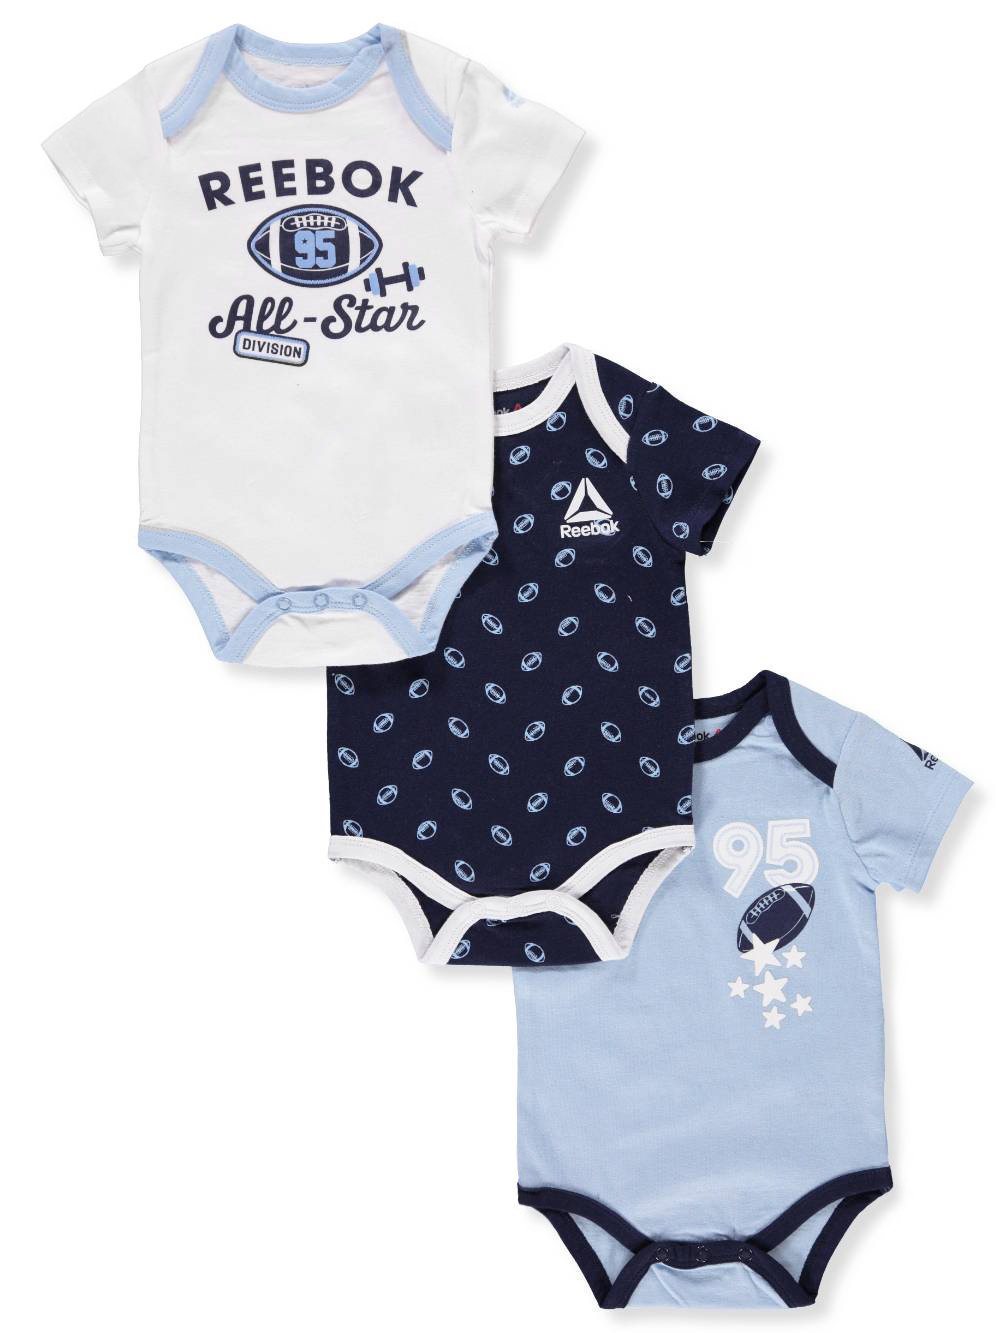 reebok infant clothing Online shopping 